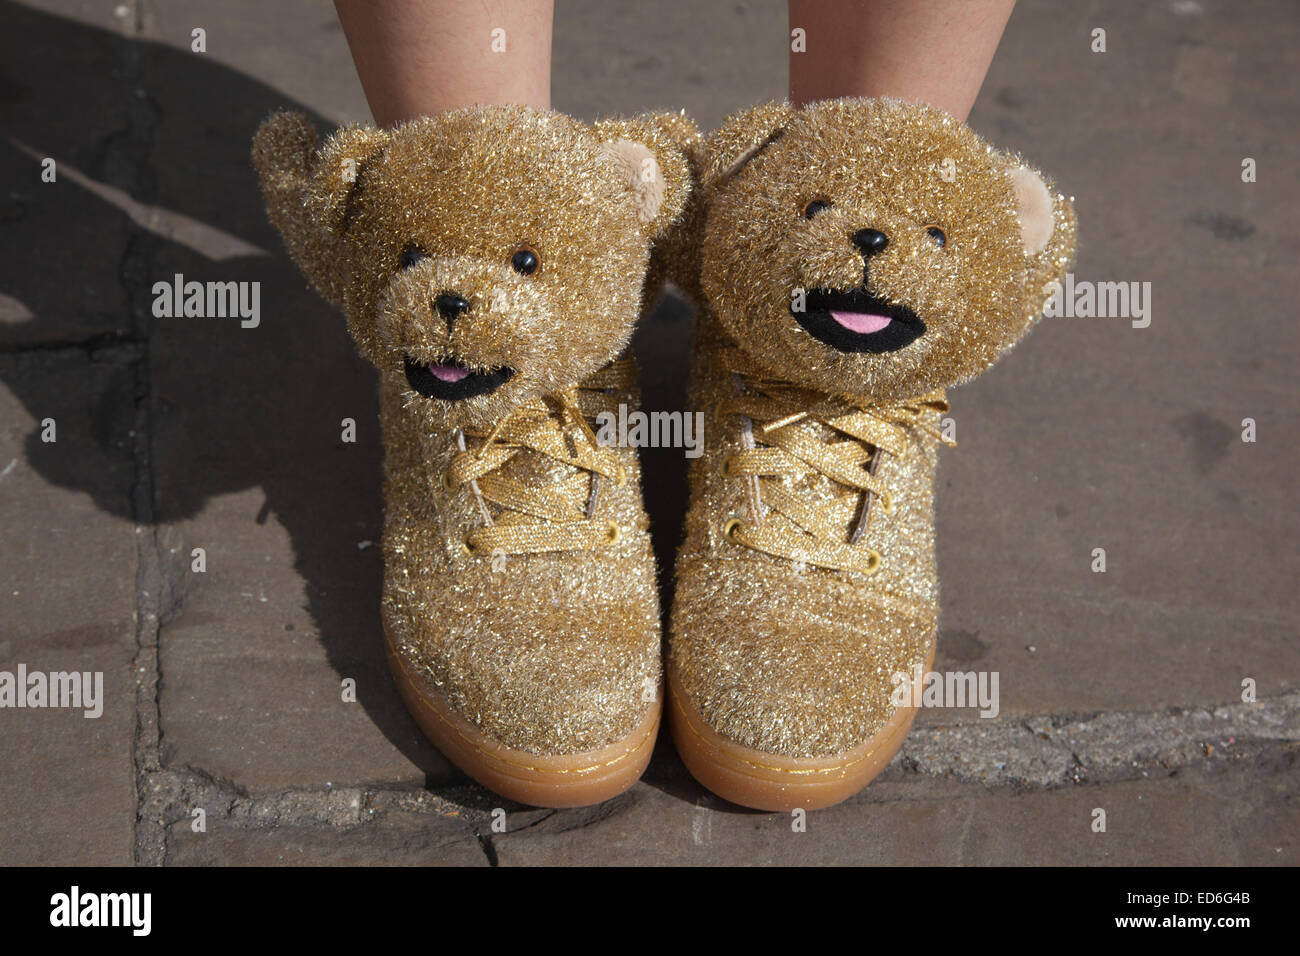 Golden Teddy bear shoes worn by a fashionista at London Fashion Week Stock  Photo - Alamy